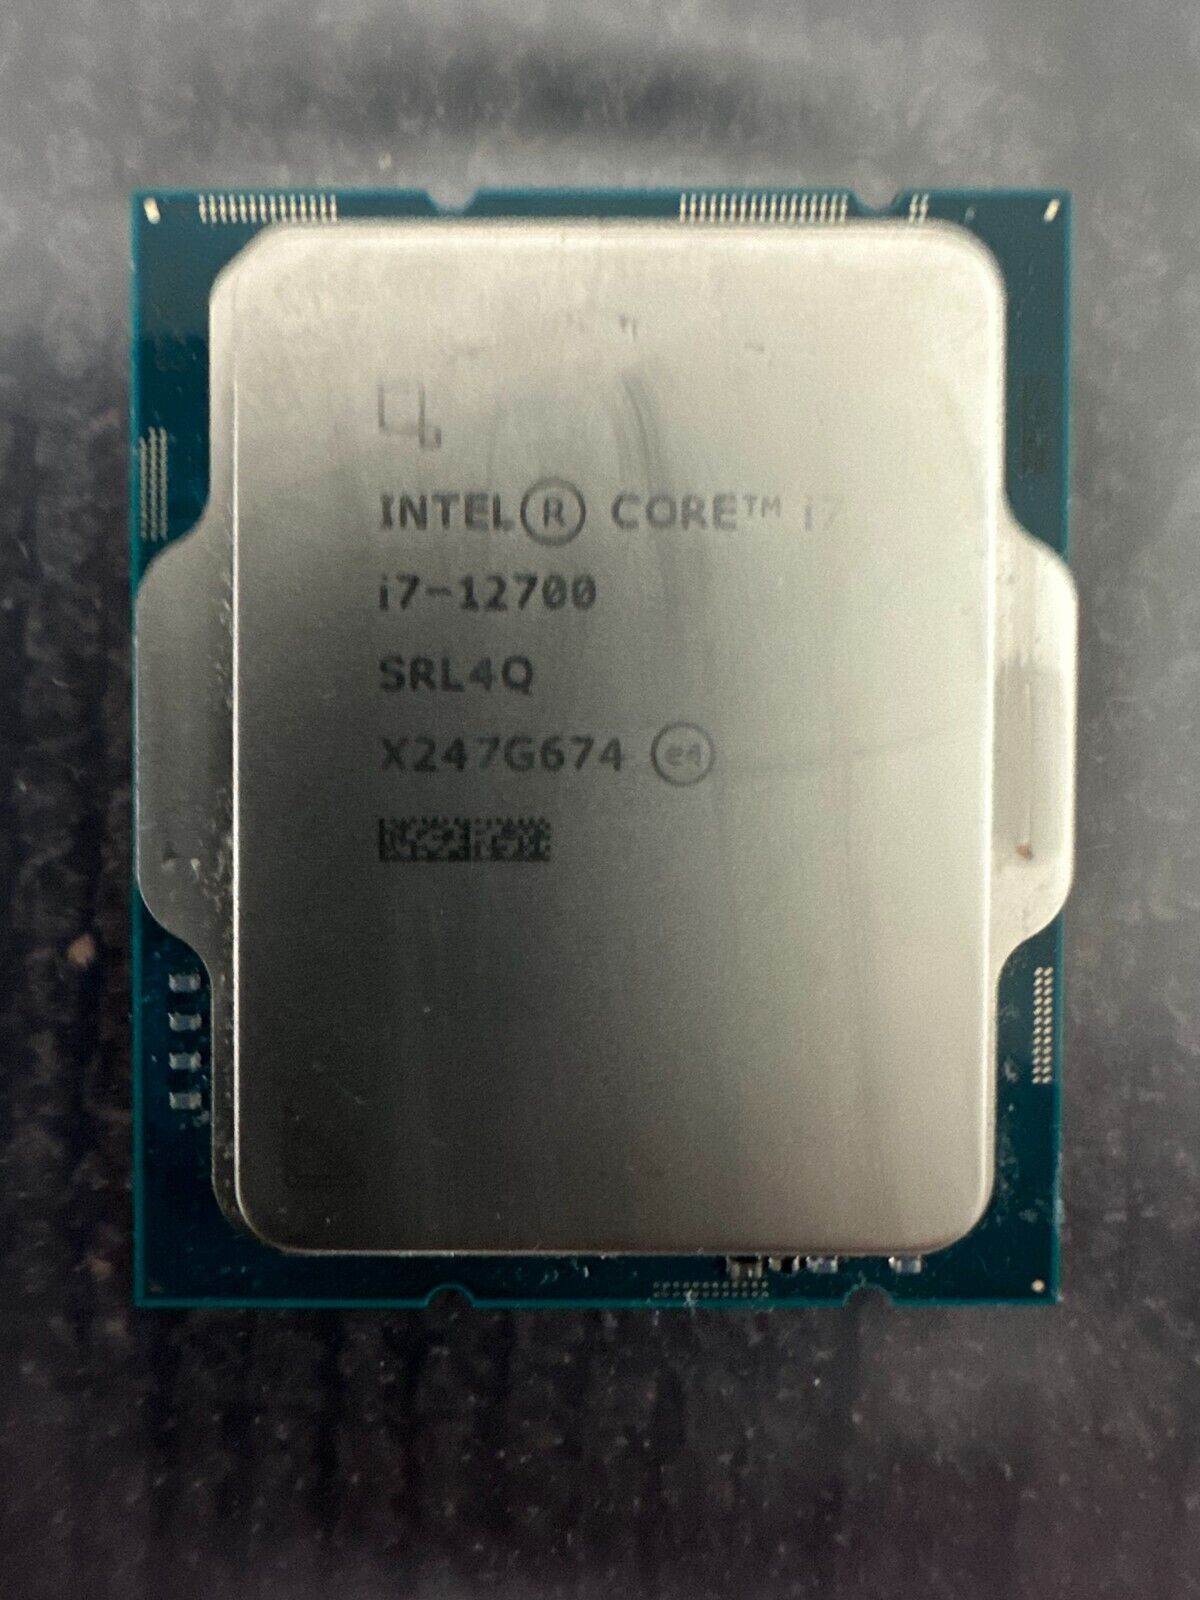 Intel Core i7-12700 4.80GHz 12-Core 25MB FCLGA1700 12th Gen Desktop CPU SRL4Q